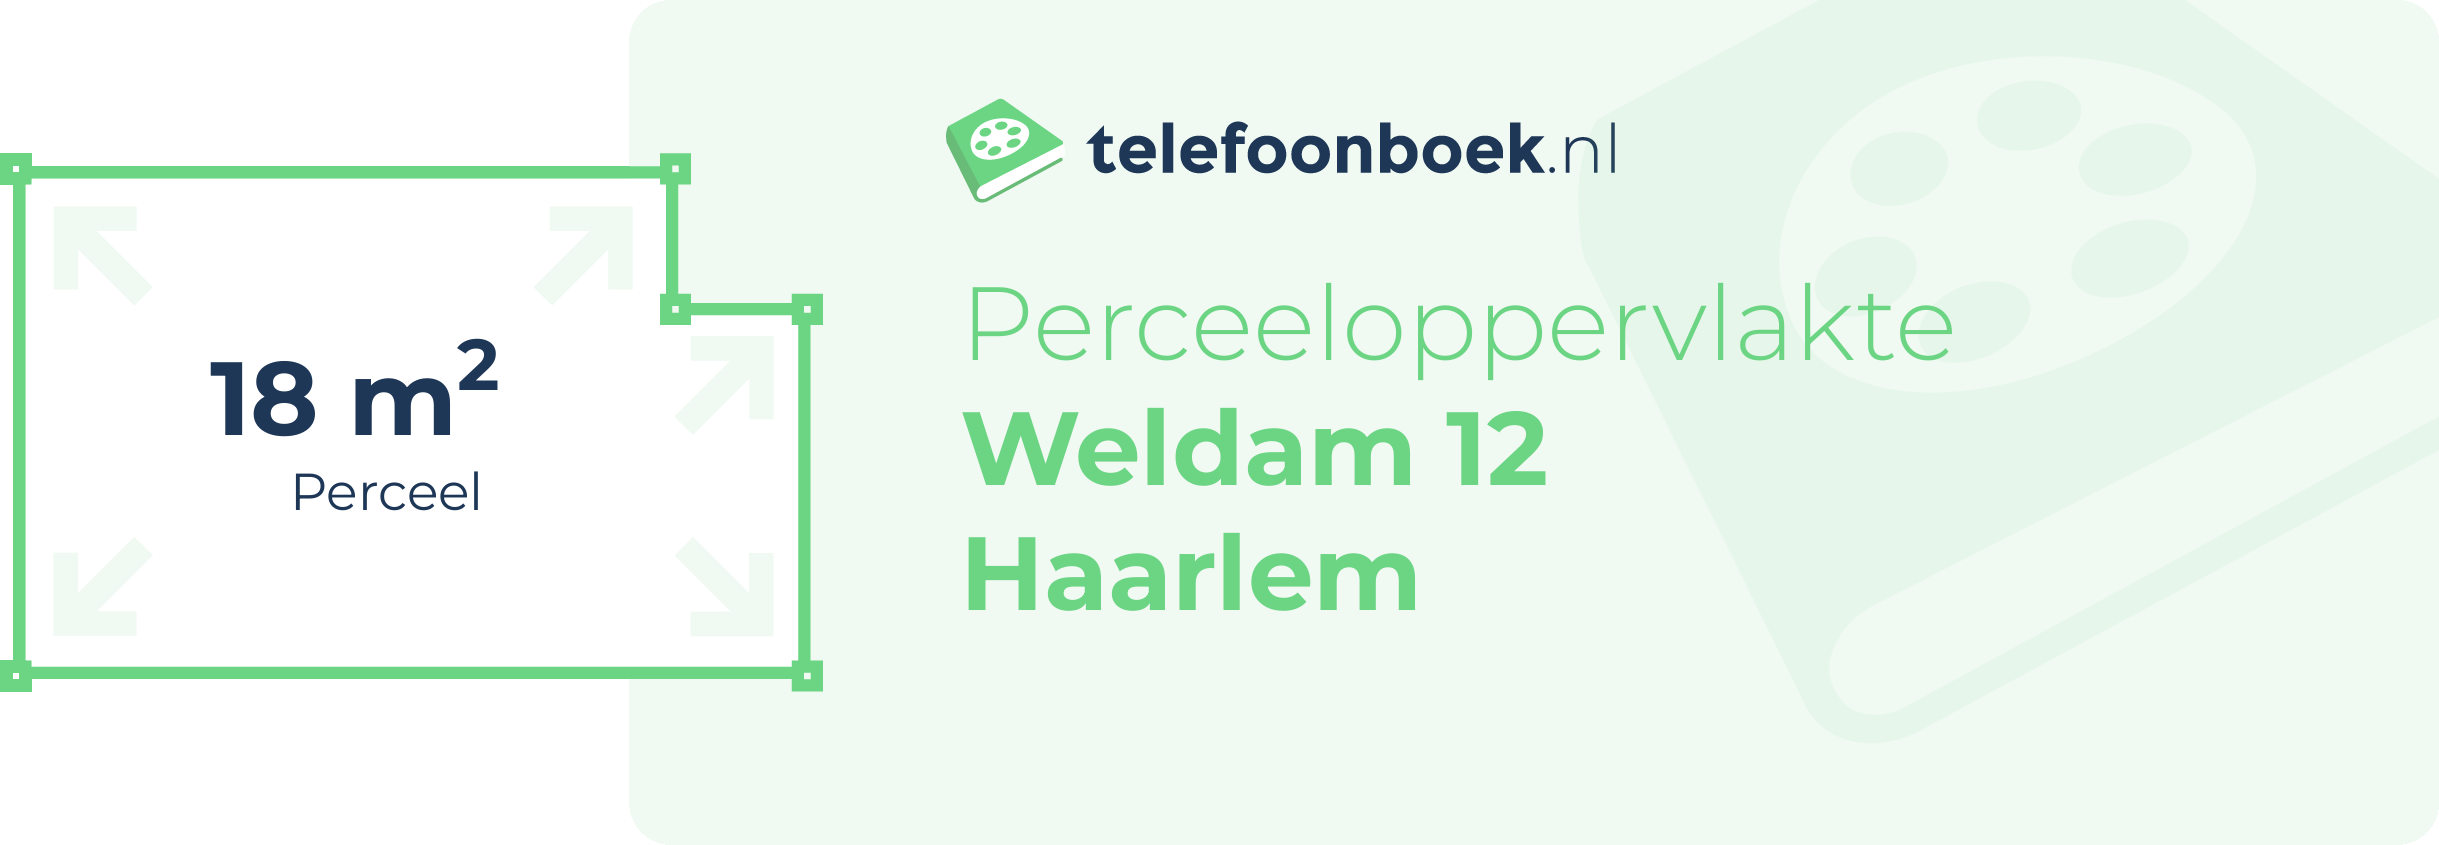 Perceeloppervlakte Weldam 12 Haarlem